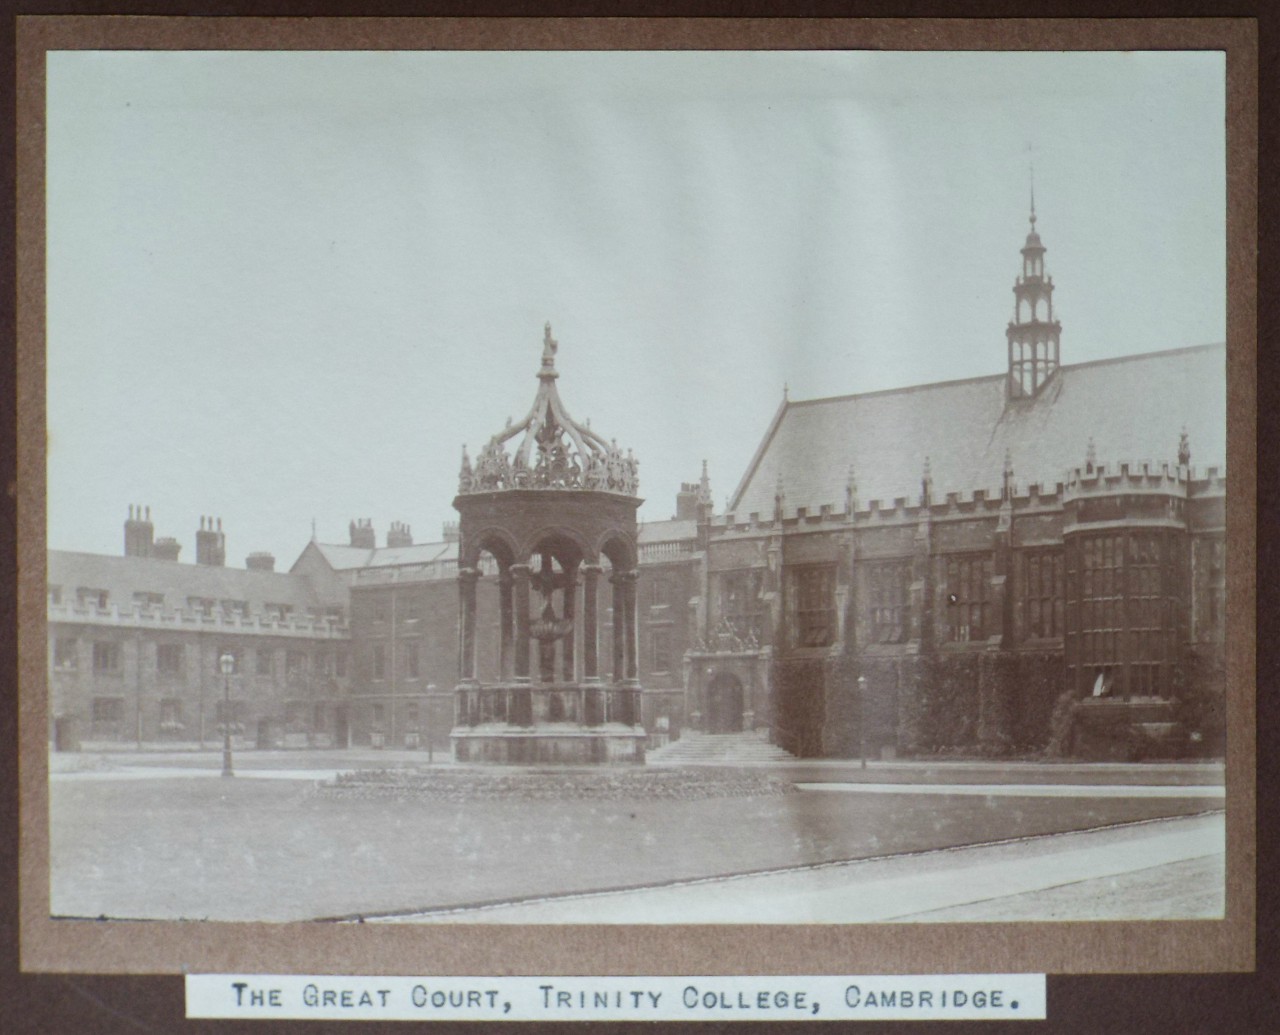 Photograph - The Great Court, Trinity College, Cambridge.